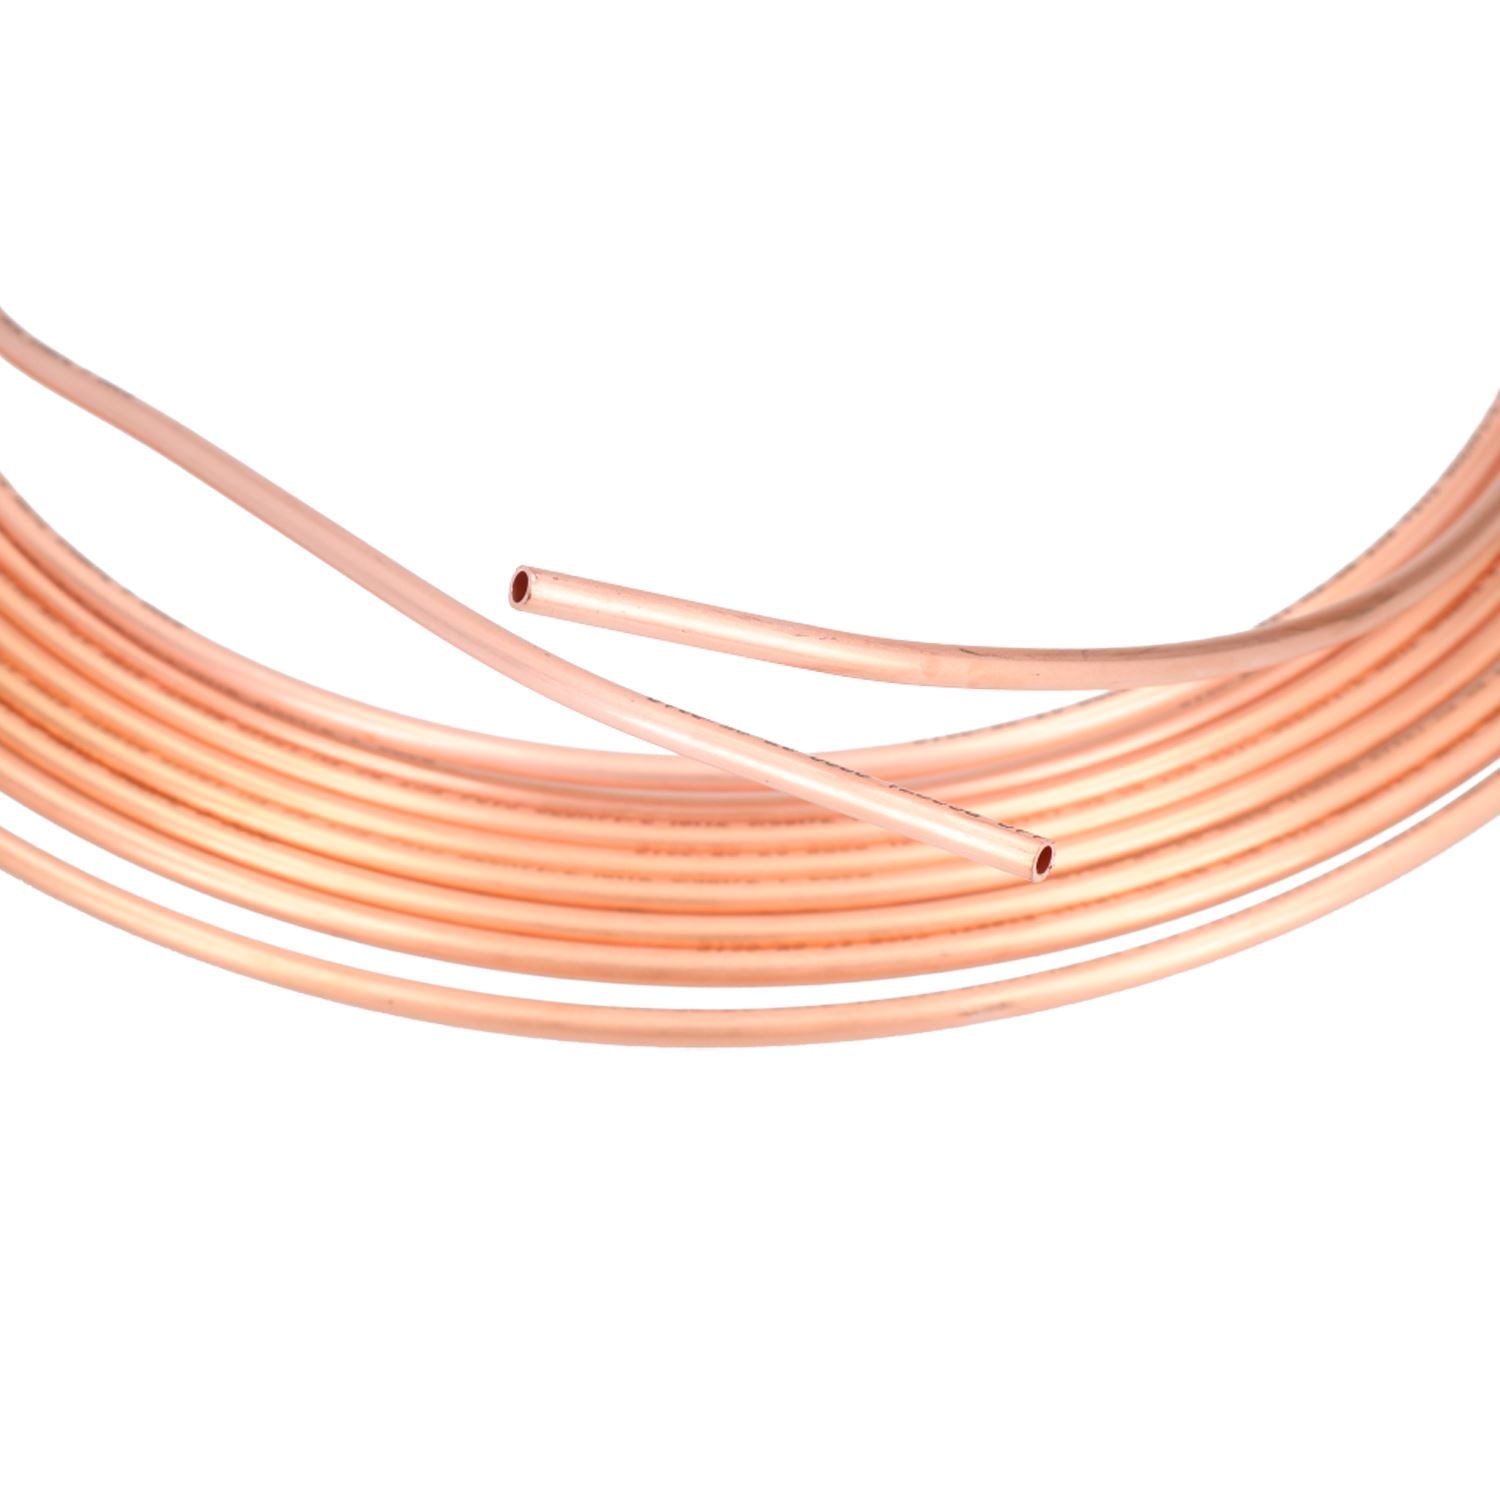 Brake Pipe Tube Copper for Brake & Hydraulic Clutch Line 7.62m Coil 22 Gauge